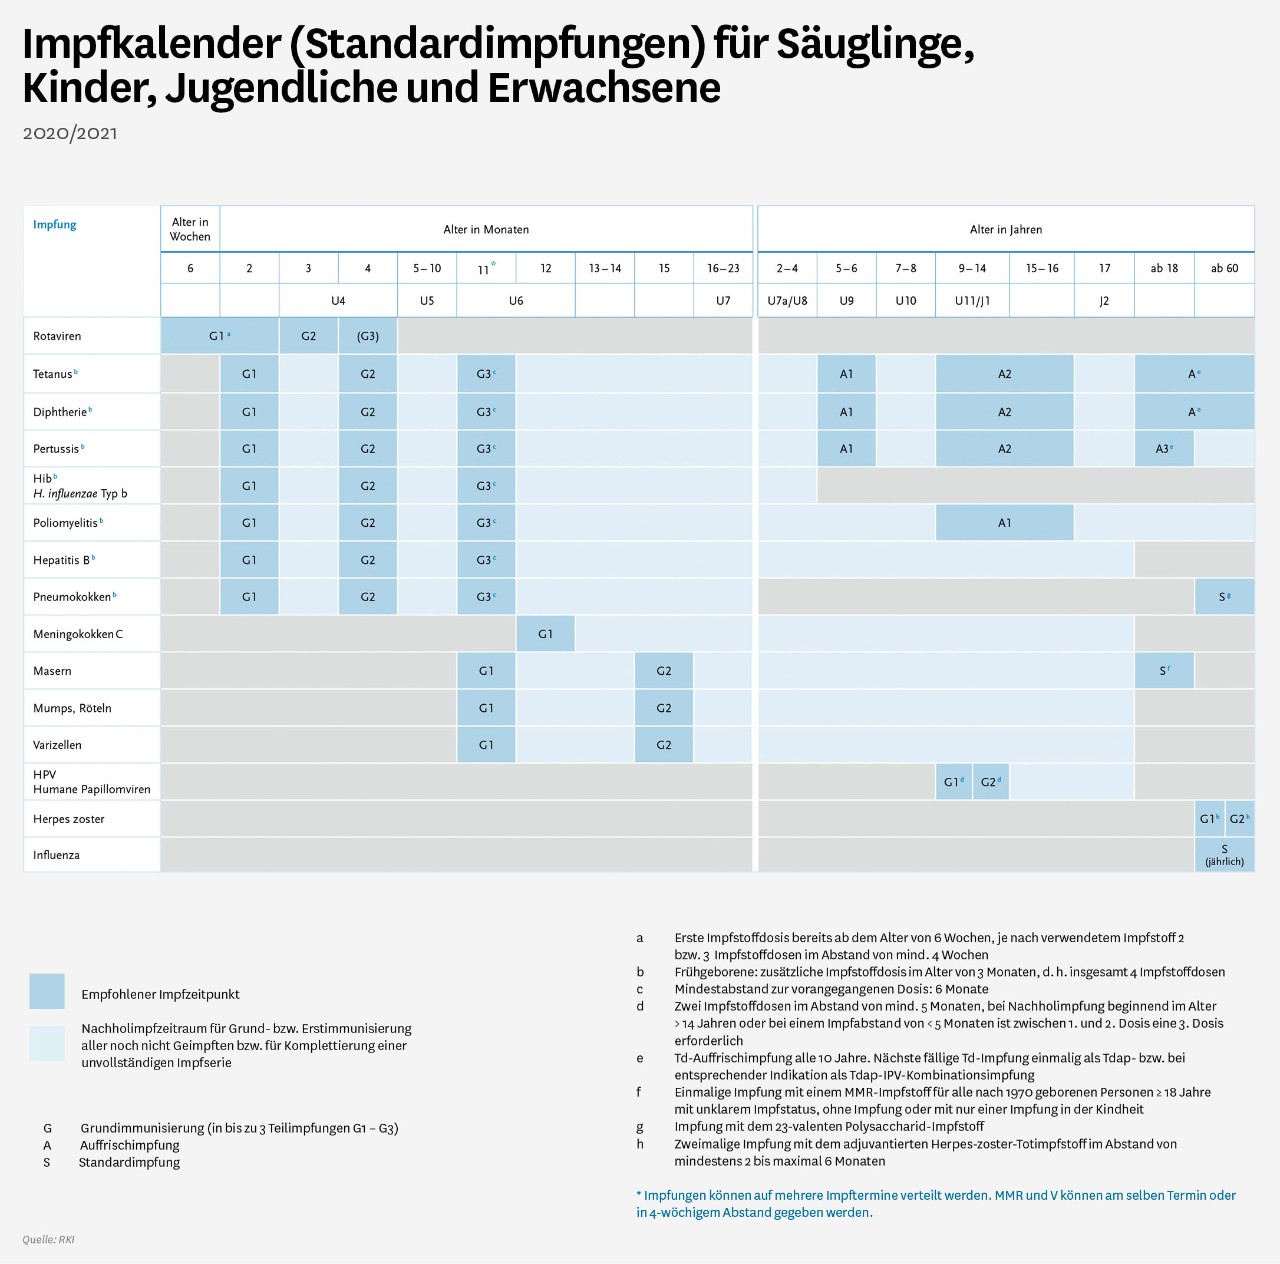 Grafik: Impfkalender (Standardimpfungen)